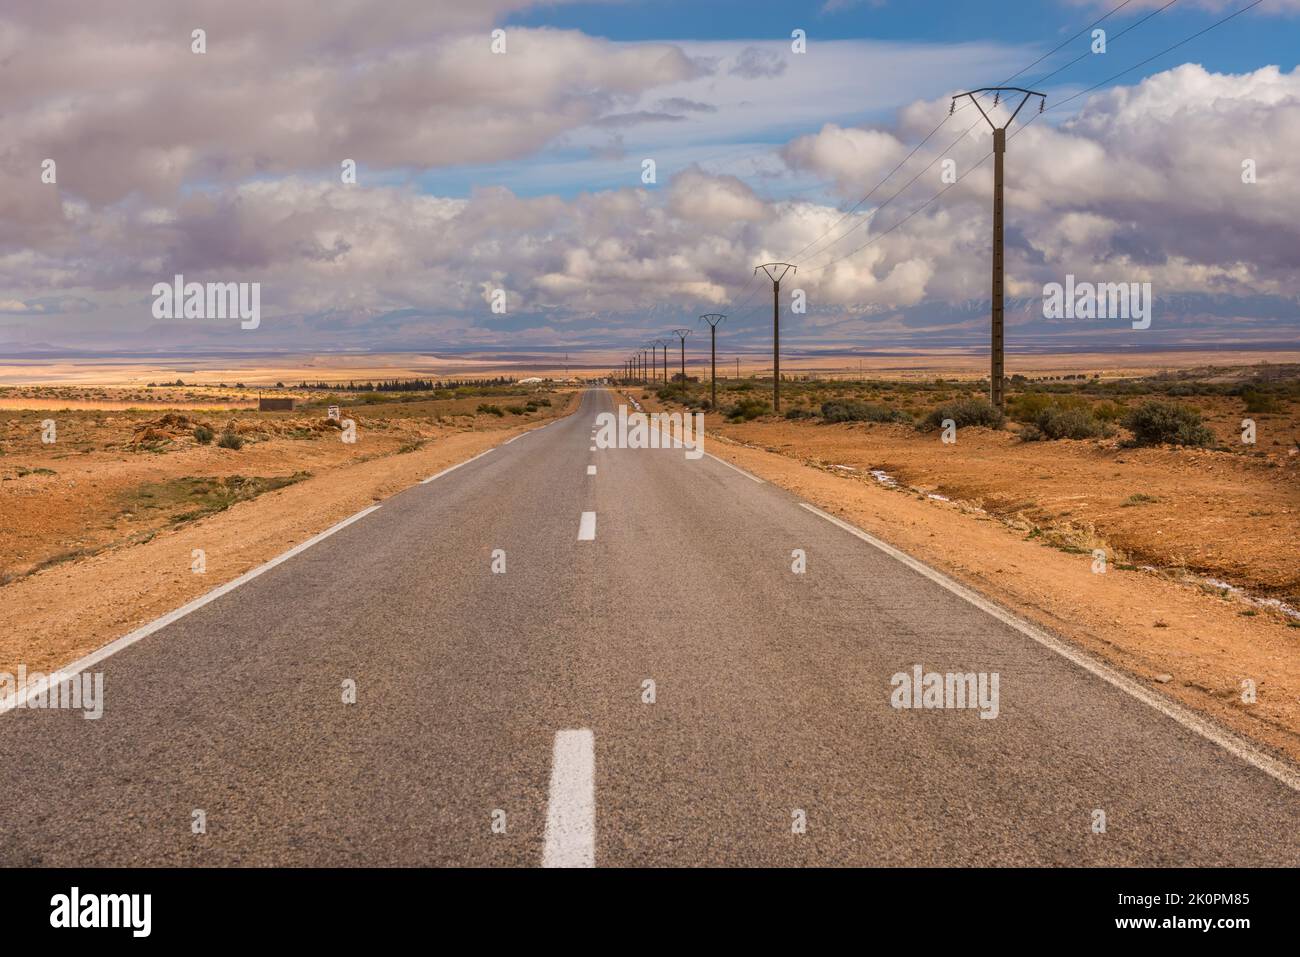 Endlose Asphaltstraße in trockenem Stein Marokko Wüste Stockfoto